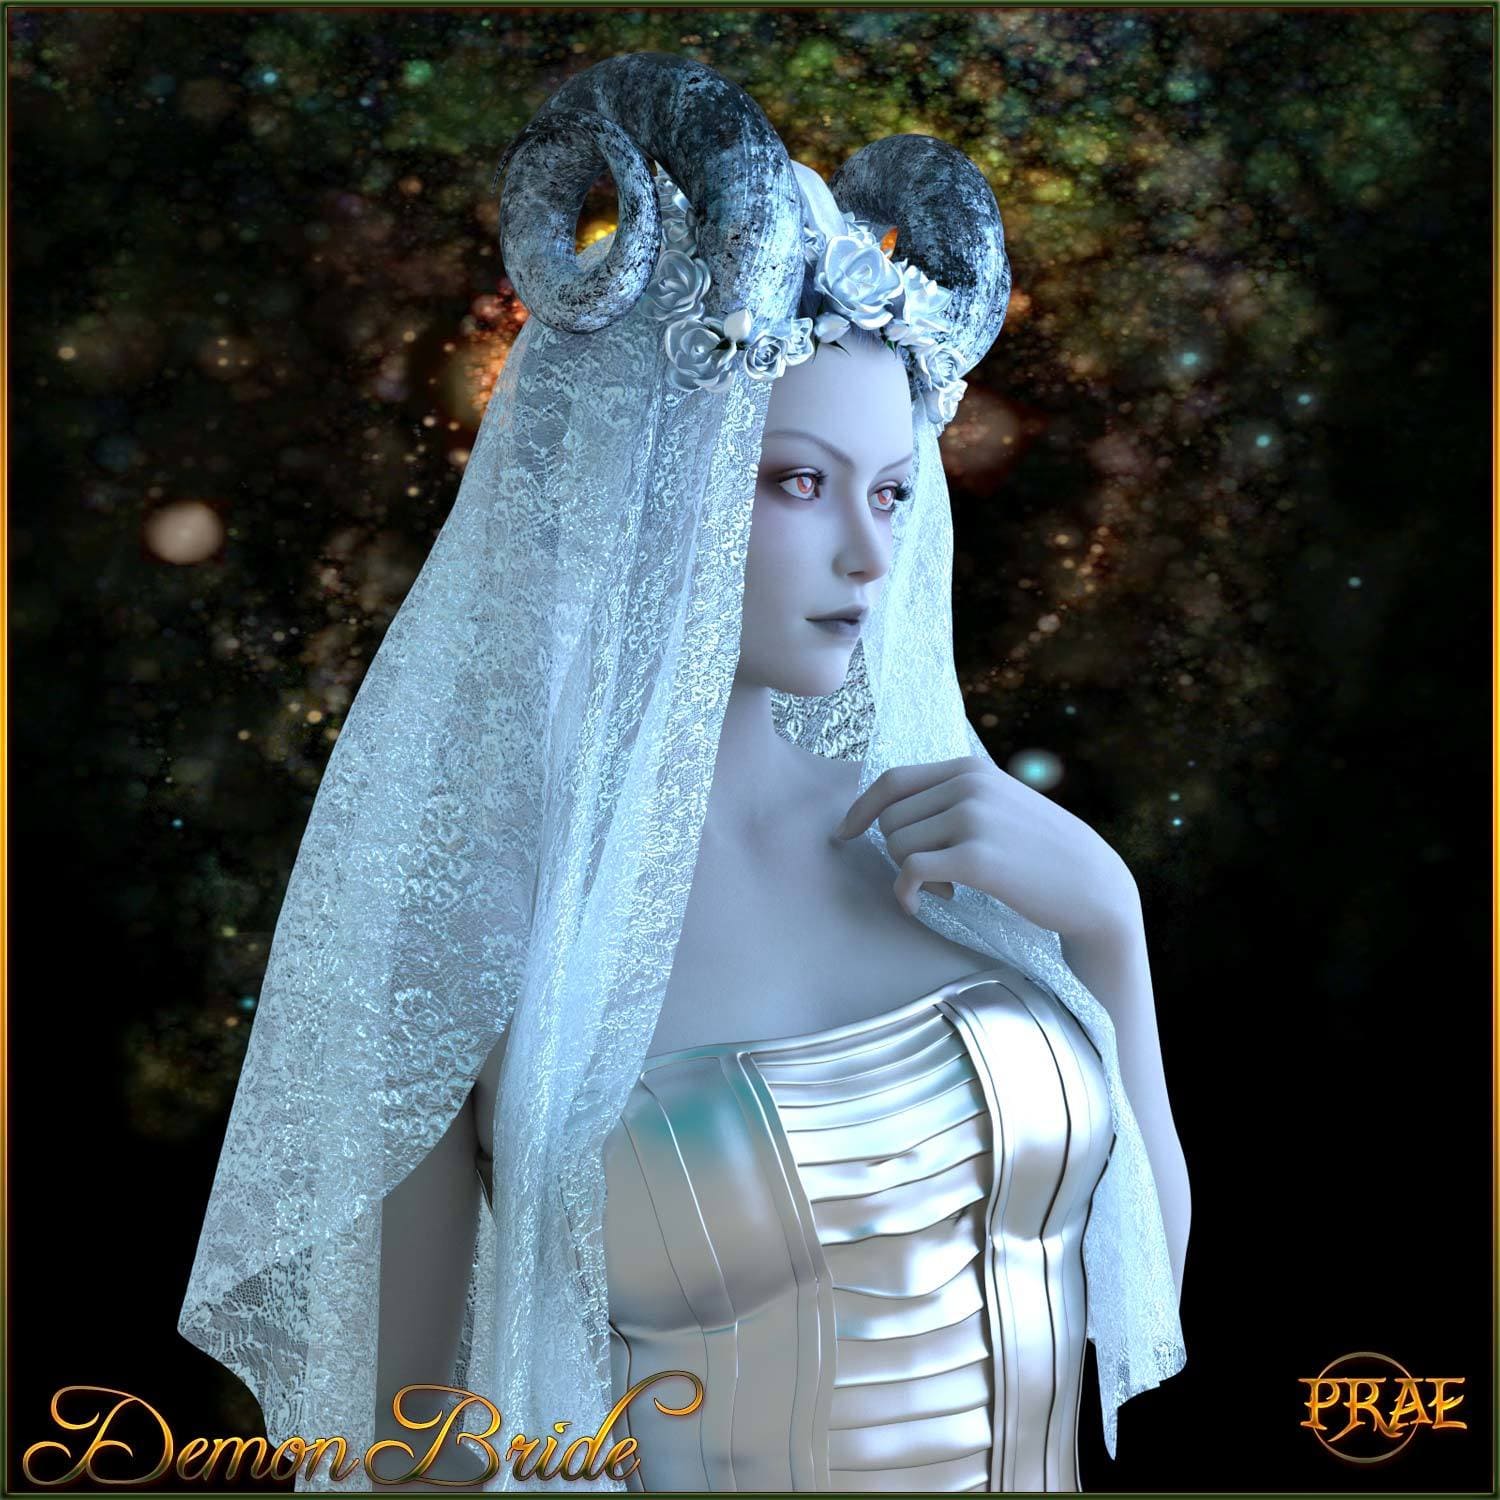 Prae-Demon Bride Headdress for G8 Daz_DAZ3D下载站